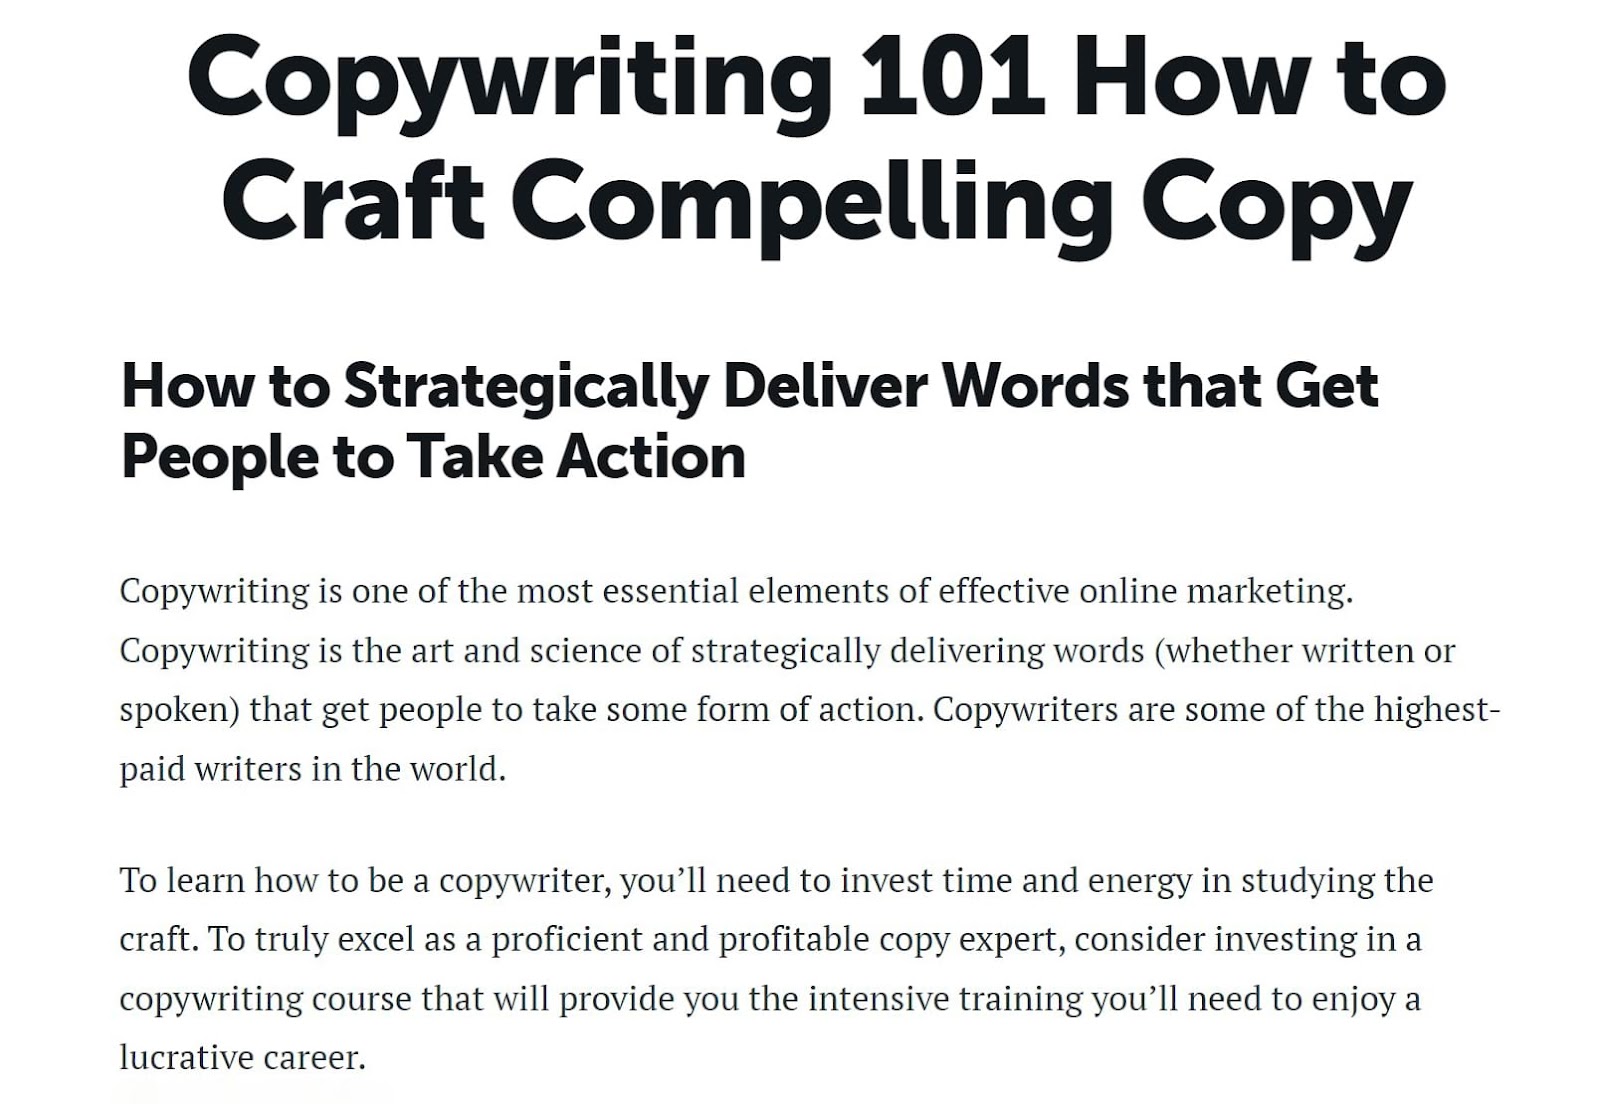 “Copywriting 101 How to Craft Compelling Copy” ebook